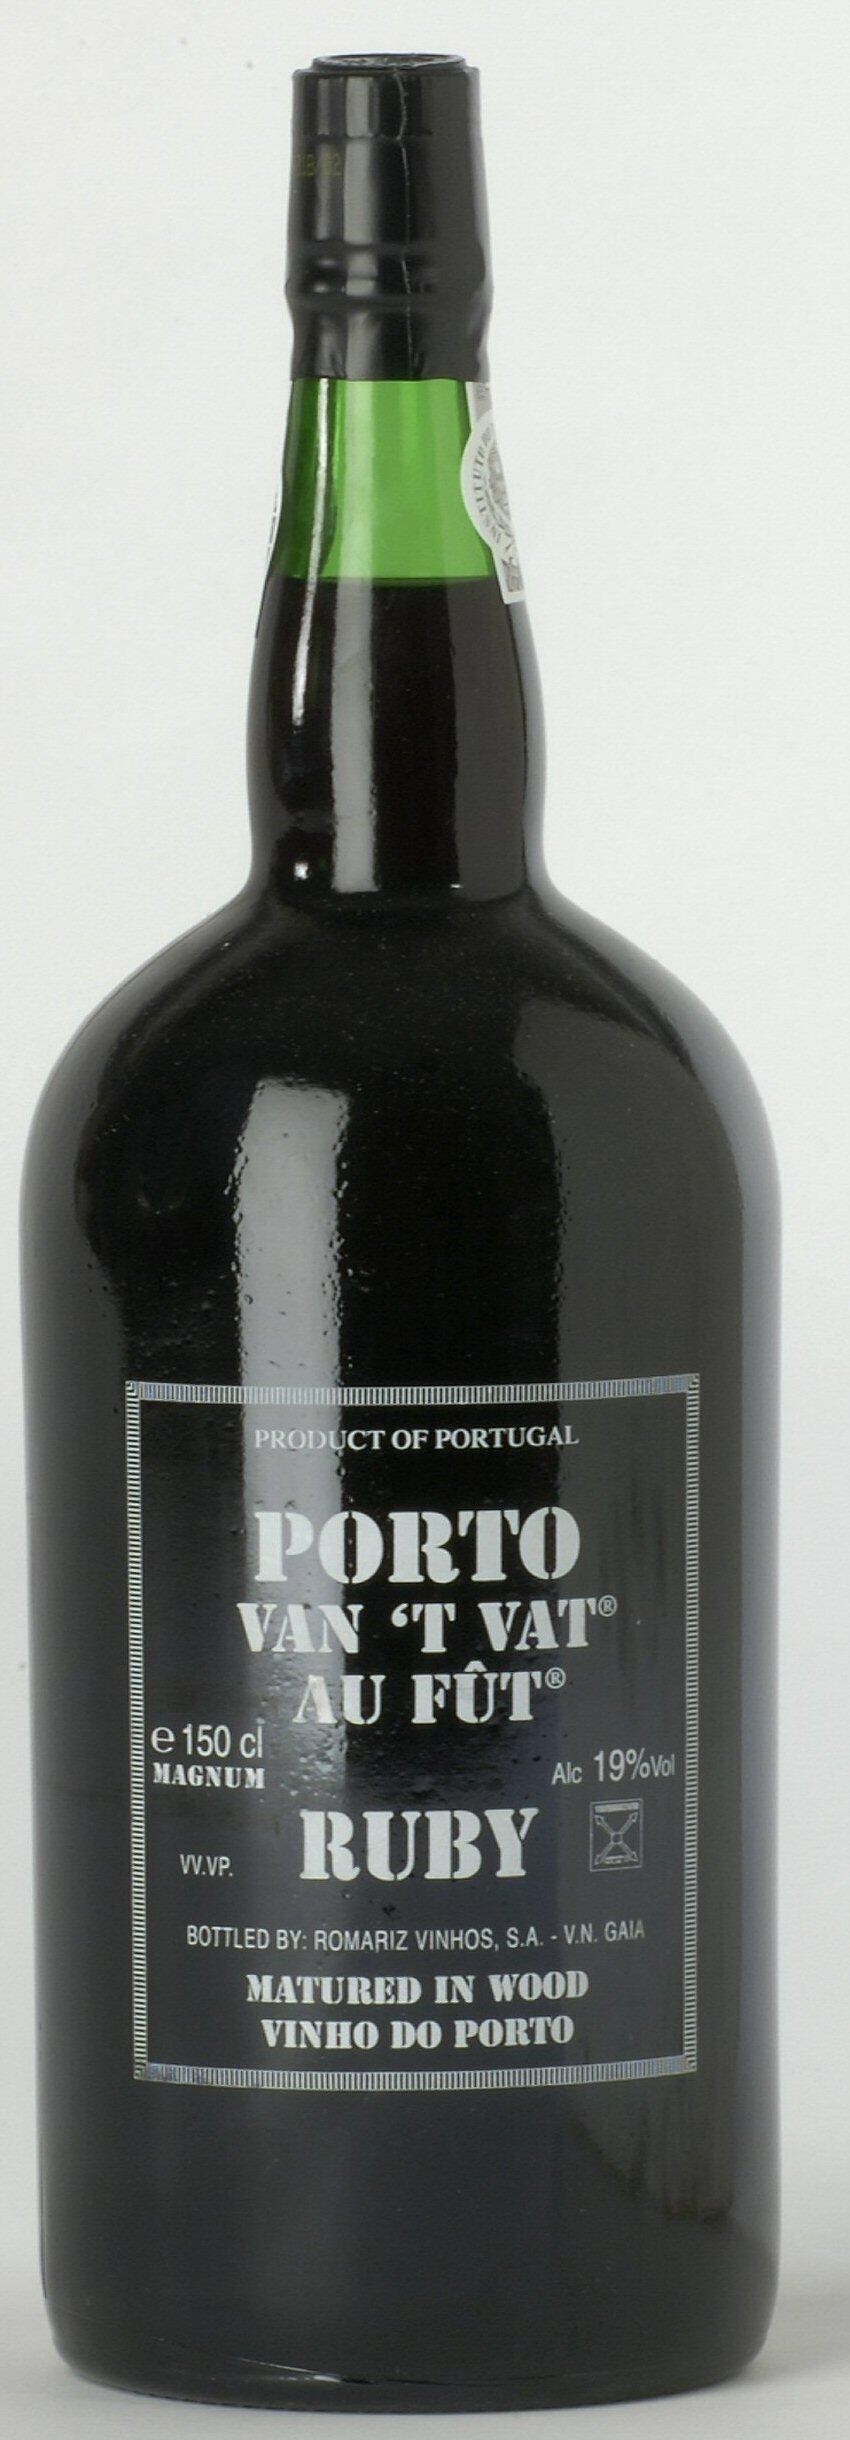 Porto van't vat rood 1.5L 19%